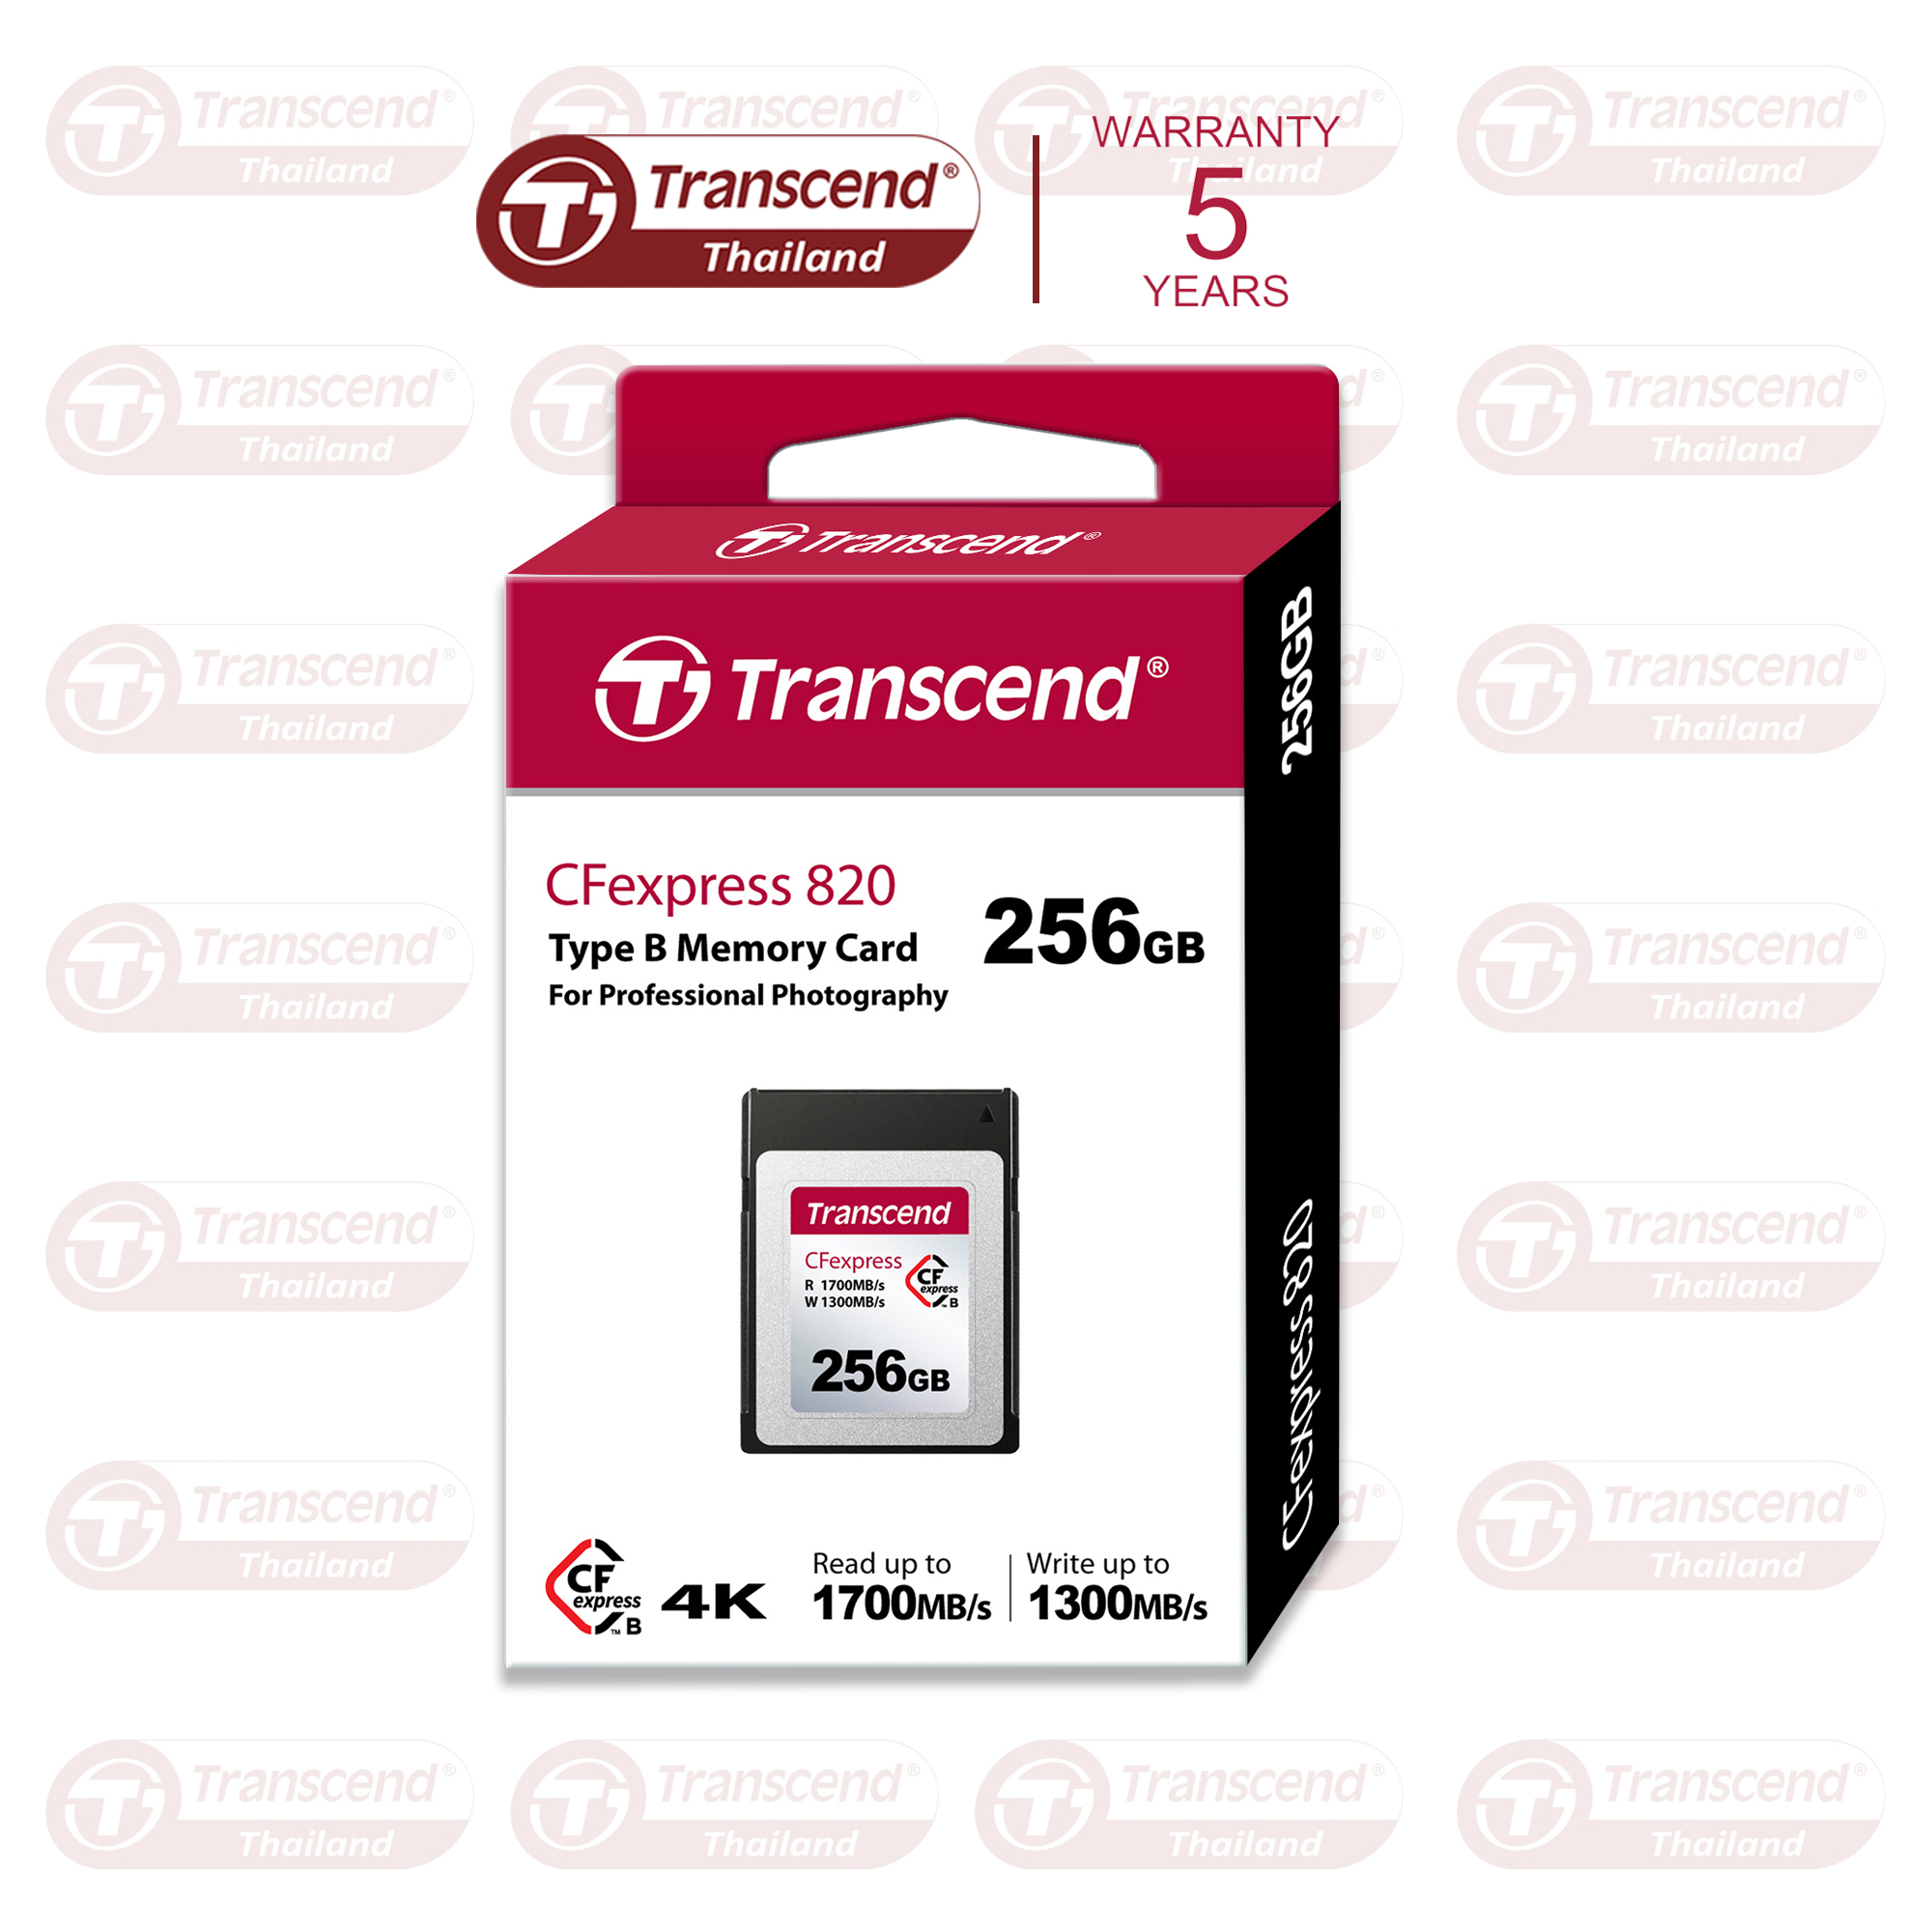 CFexpress 820 Type B memory cards : 256GB/512GB - Transcend รับประกัน 5 ปี- มีใบกำกับภาษี